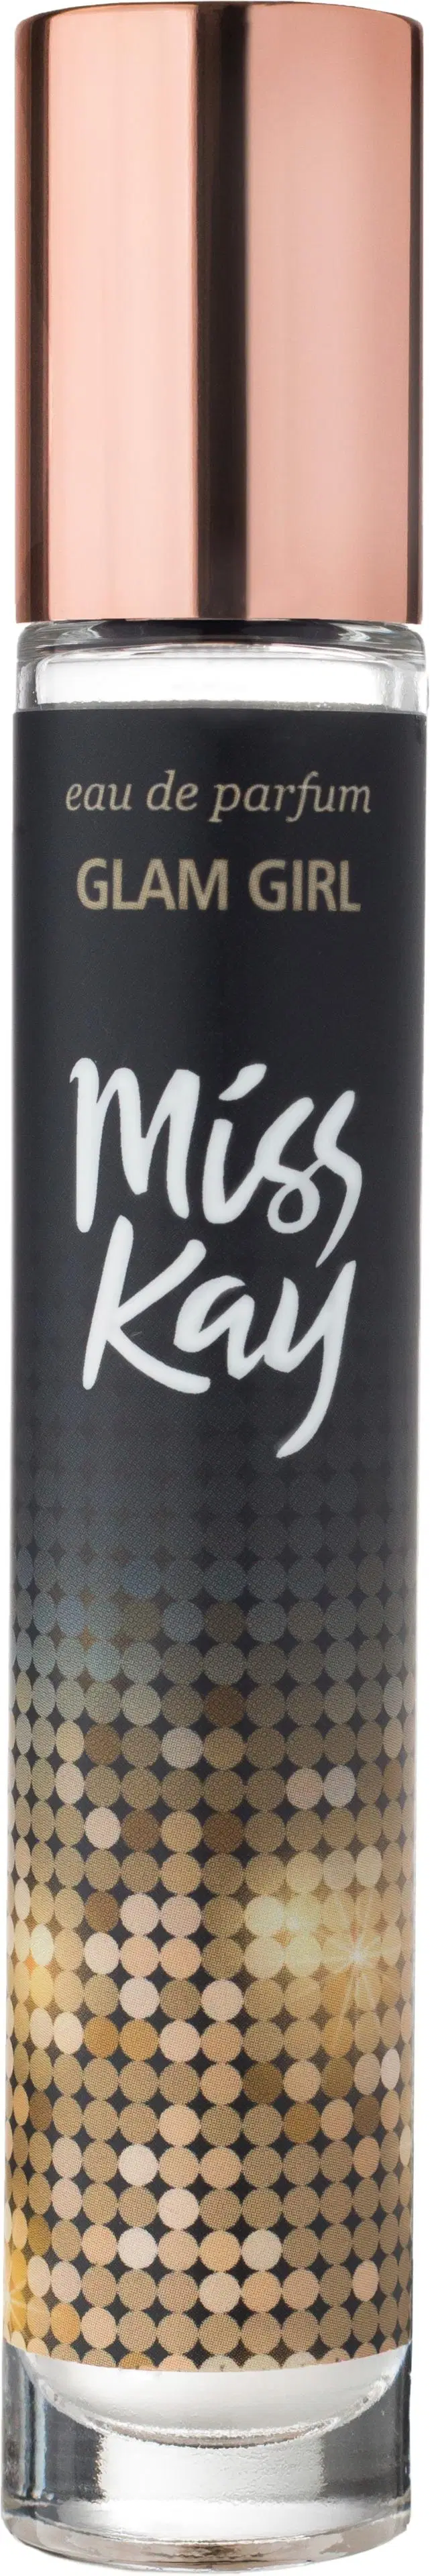 Miss Kay Glam Girl EdP tuoksu 24,5 ml